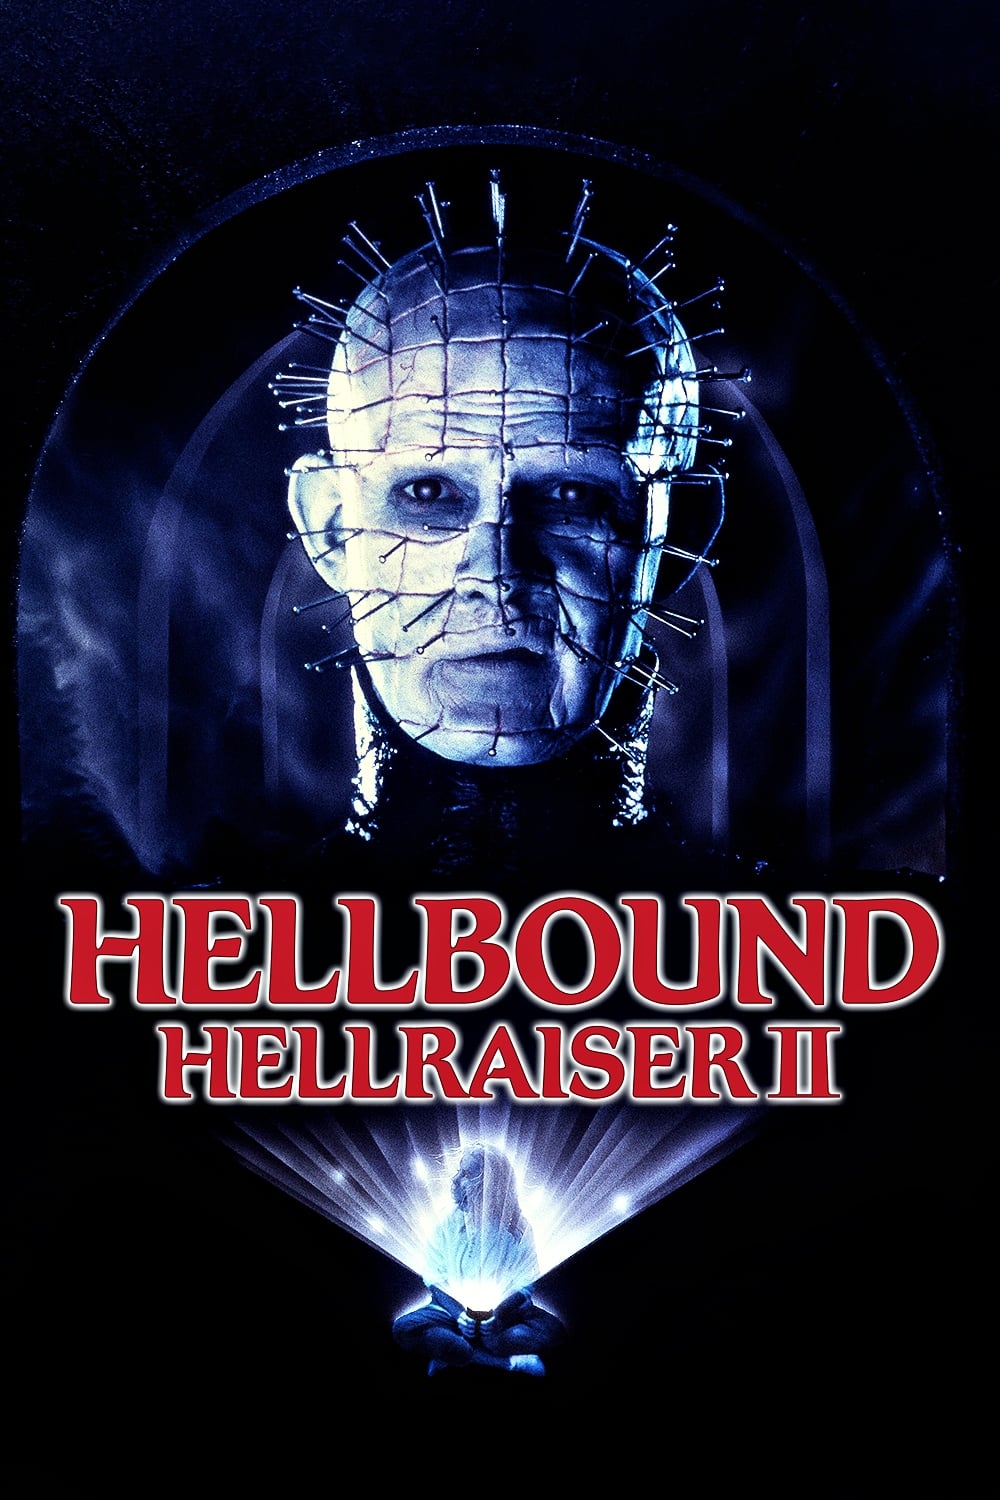 Hellraiser II: Renascido das Trevas